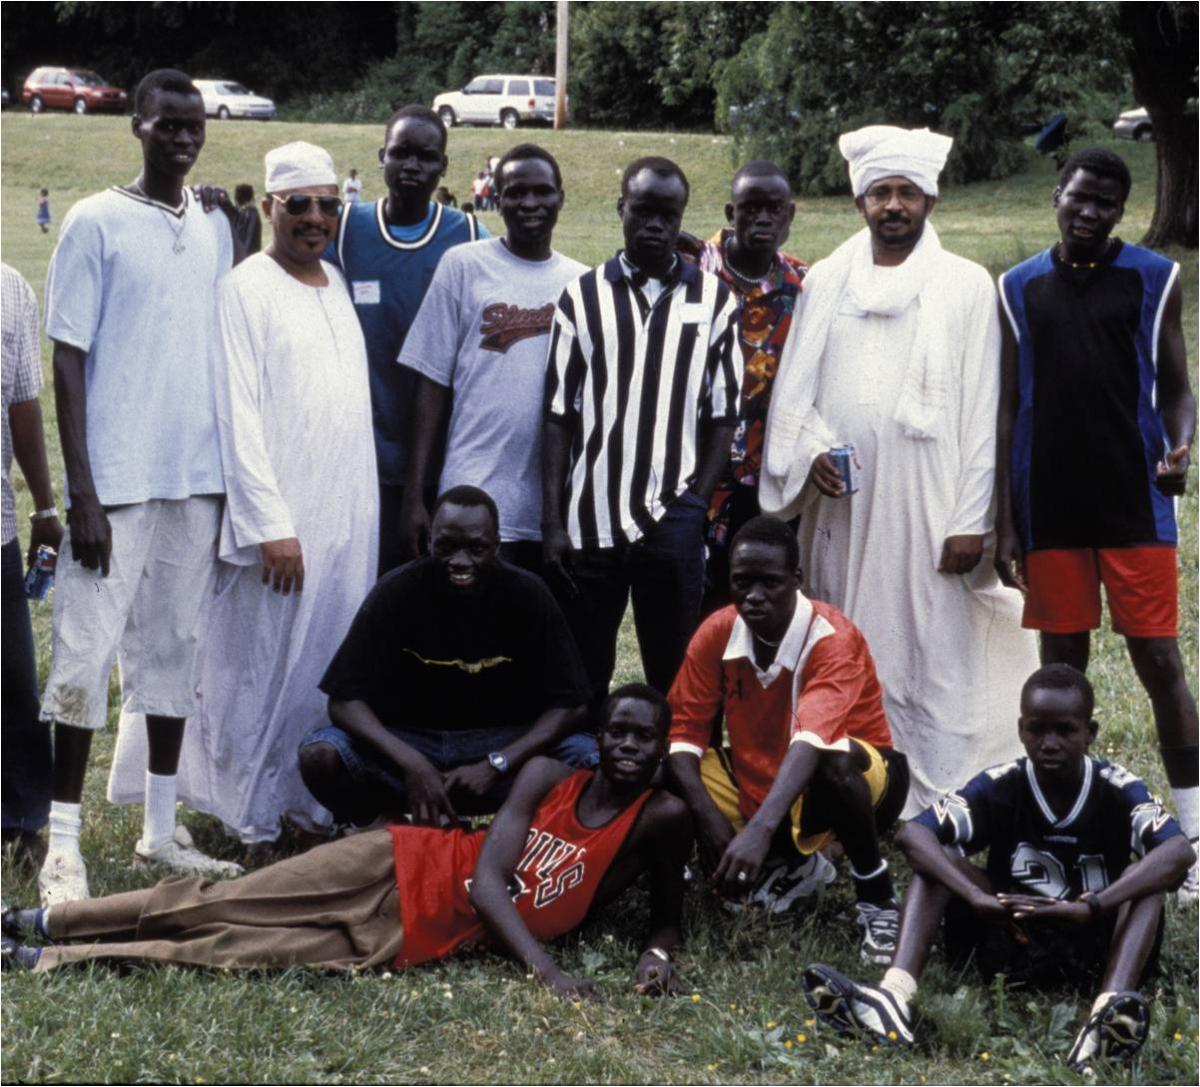 North and South Sudanese at a Sudanese Society picnic, Fairmount Park